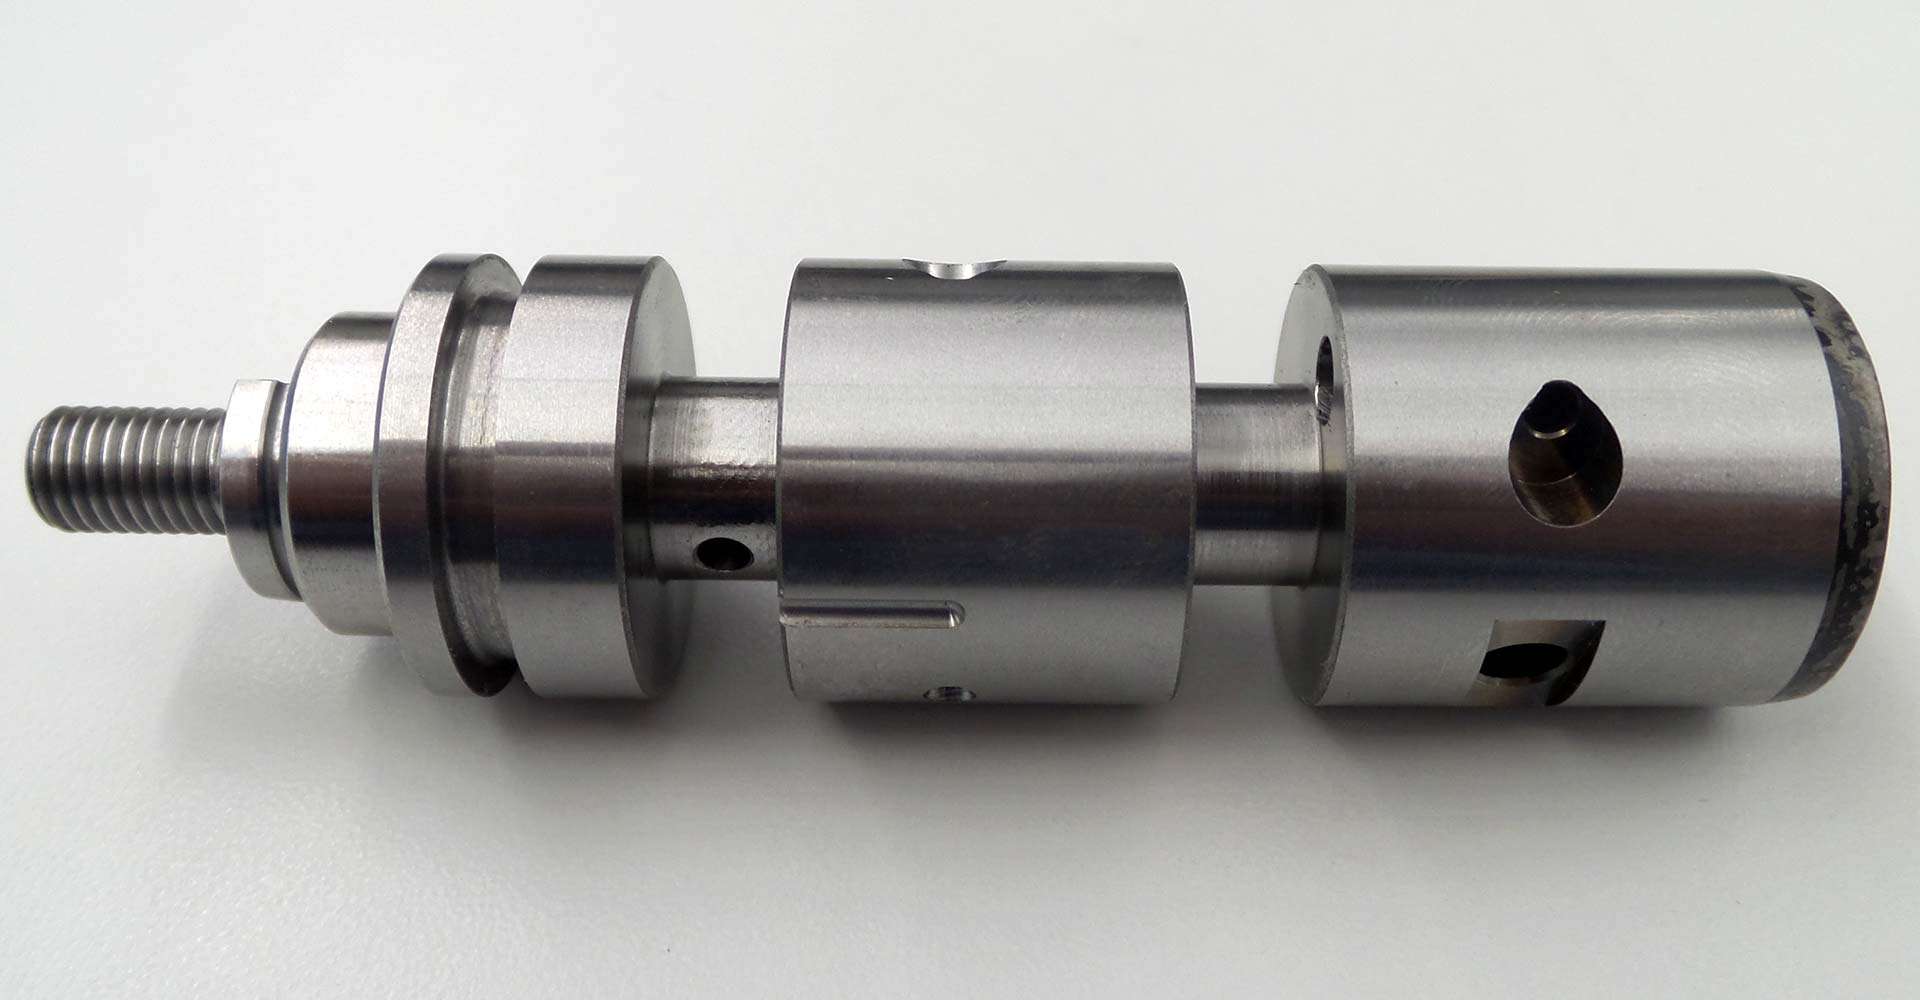 Steel screw machined valve